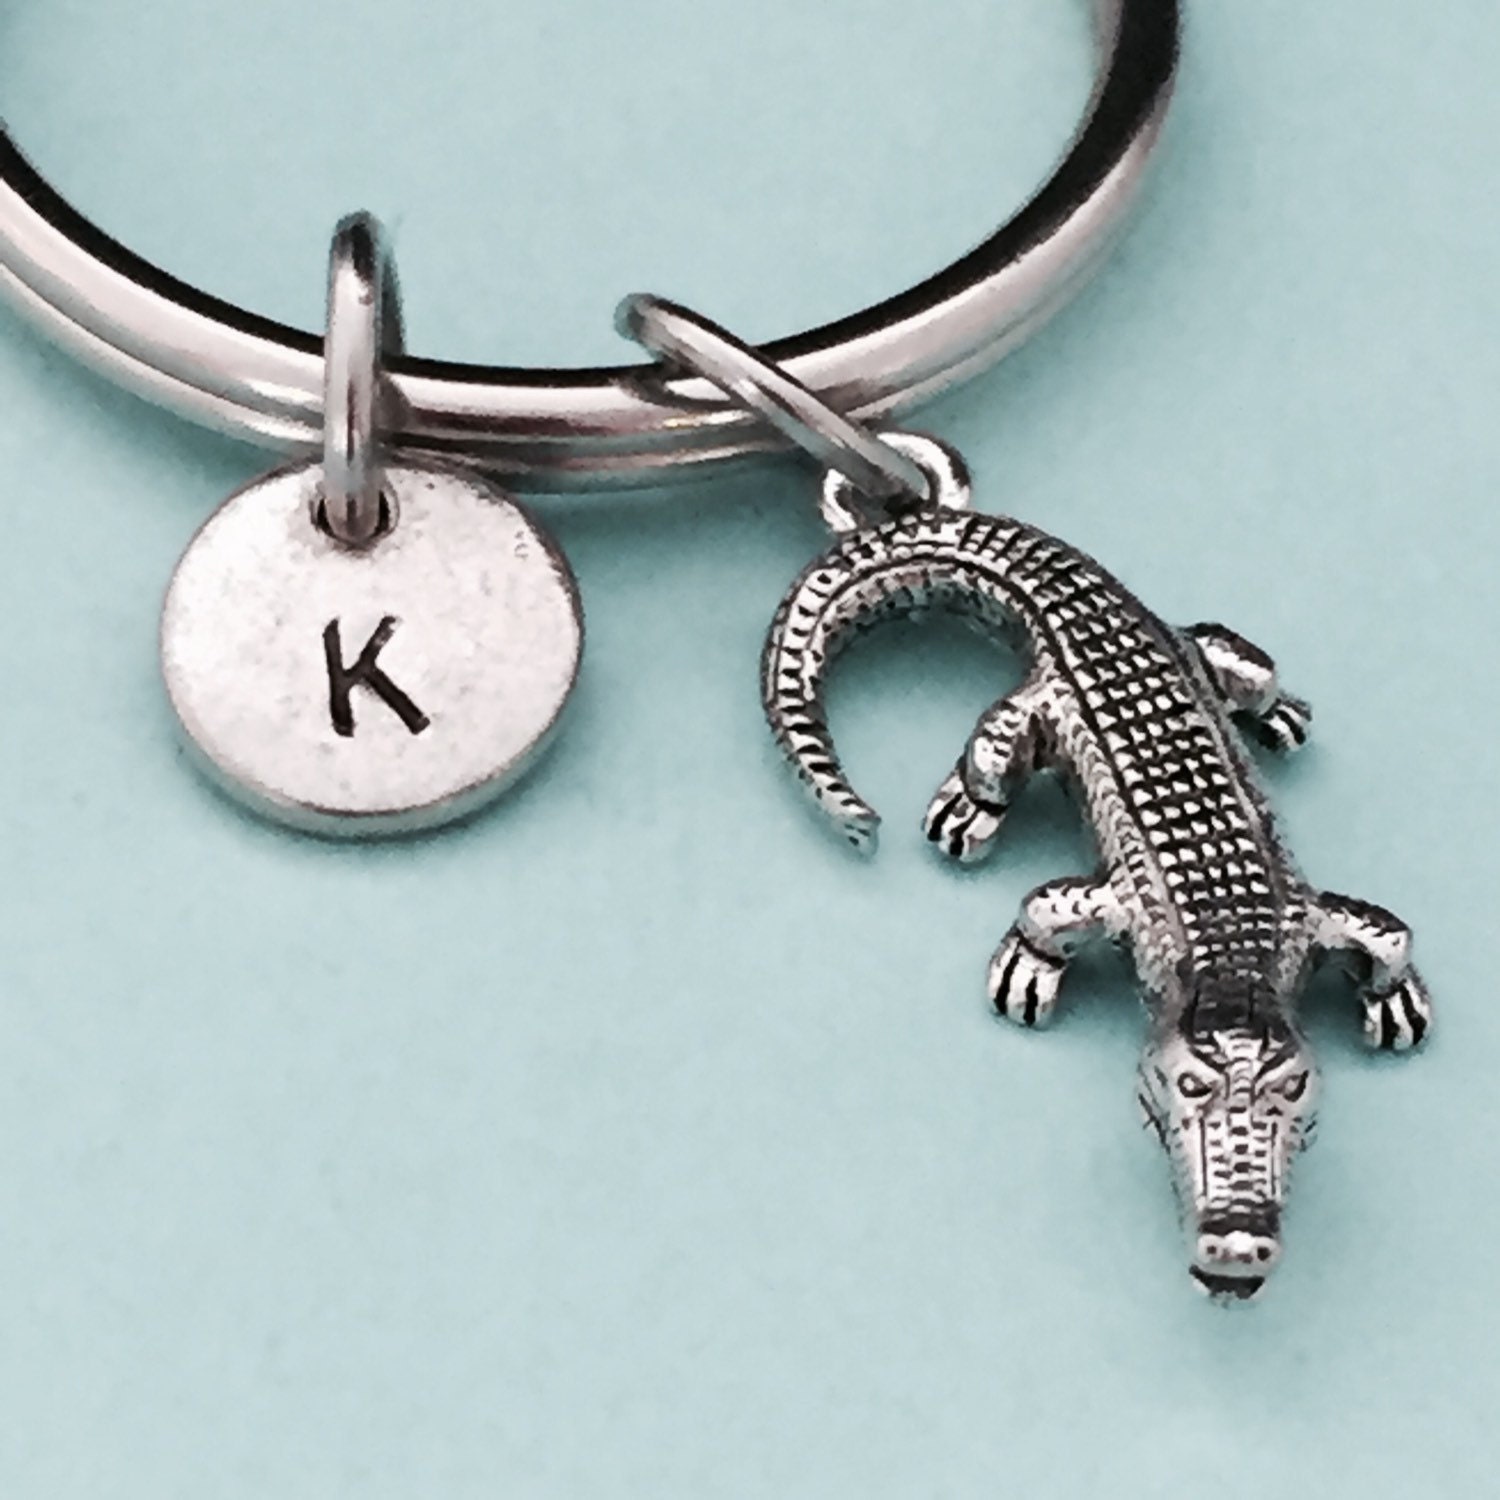 Alligator Key Ring Personalized No. 3, USA Made